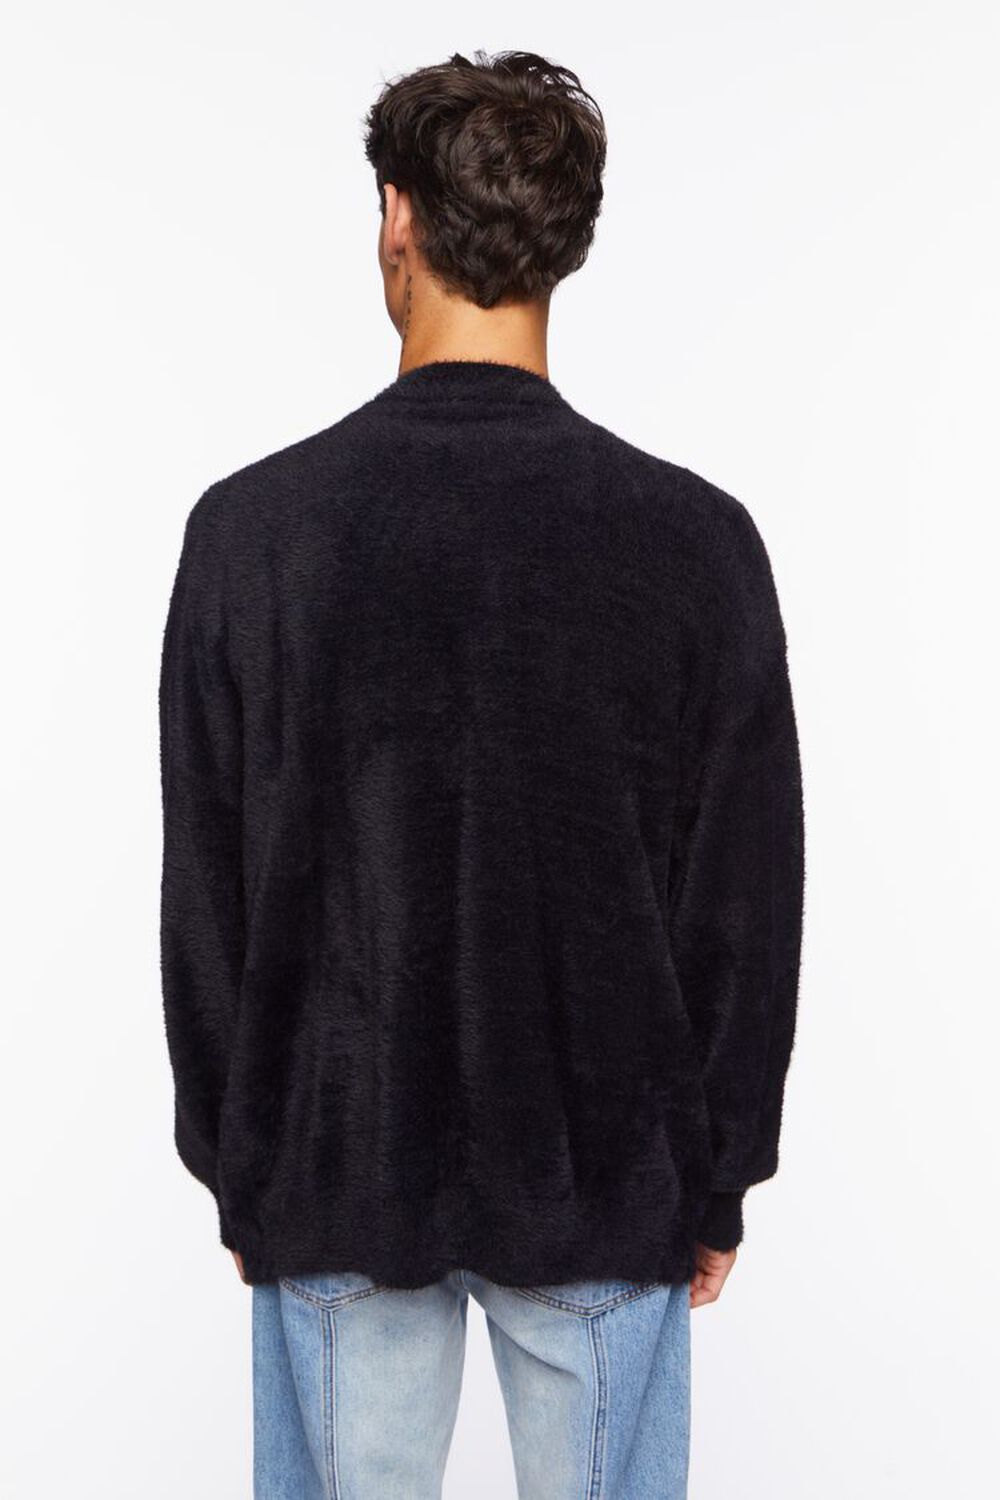 BLACK Fuzzy Knit Cardigan Sweater, image 3